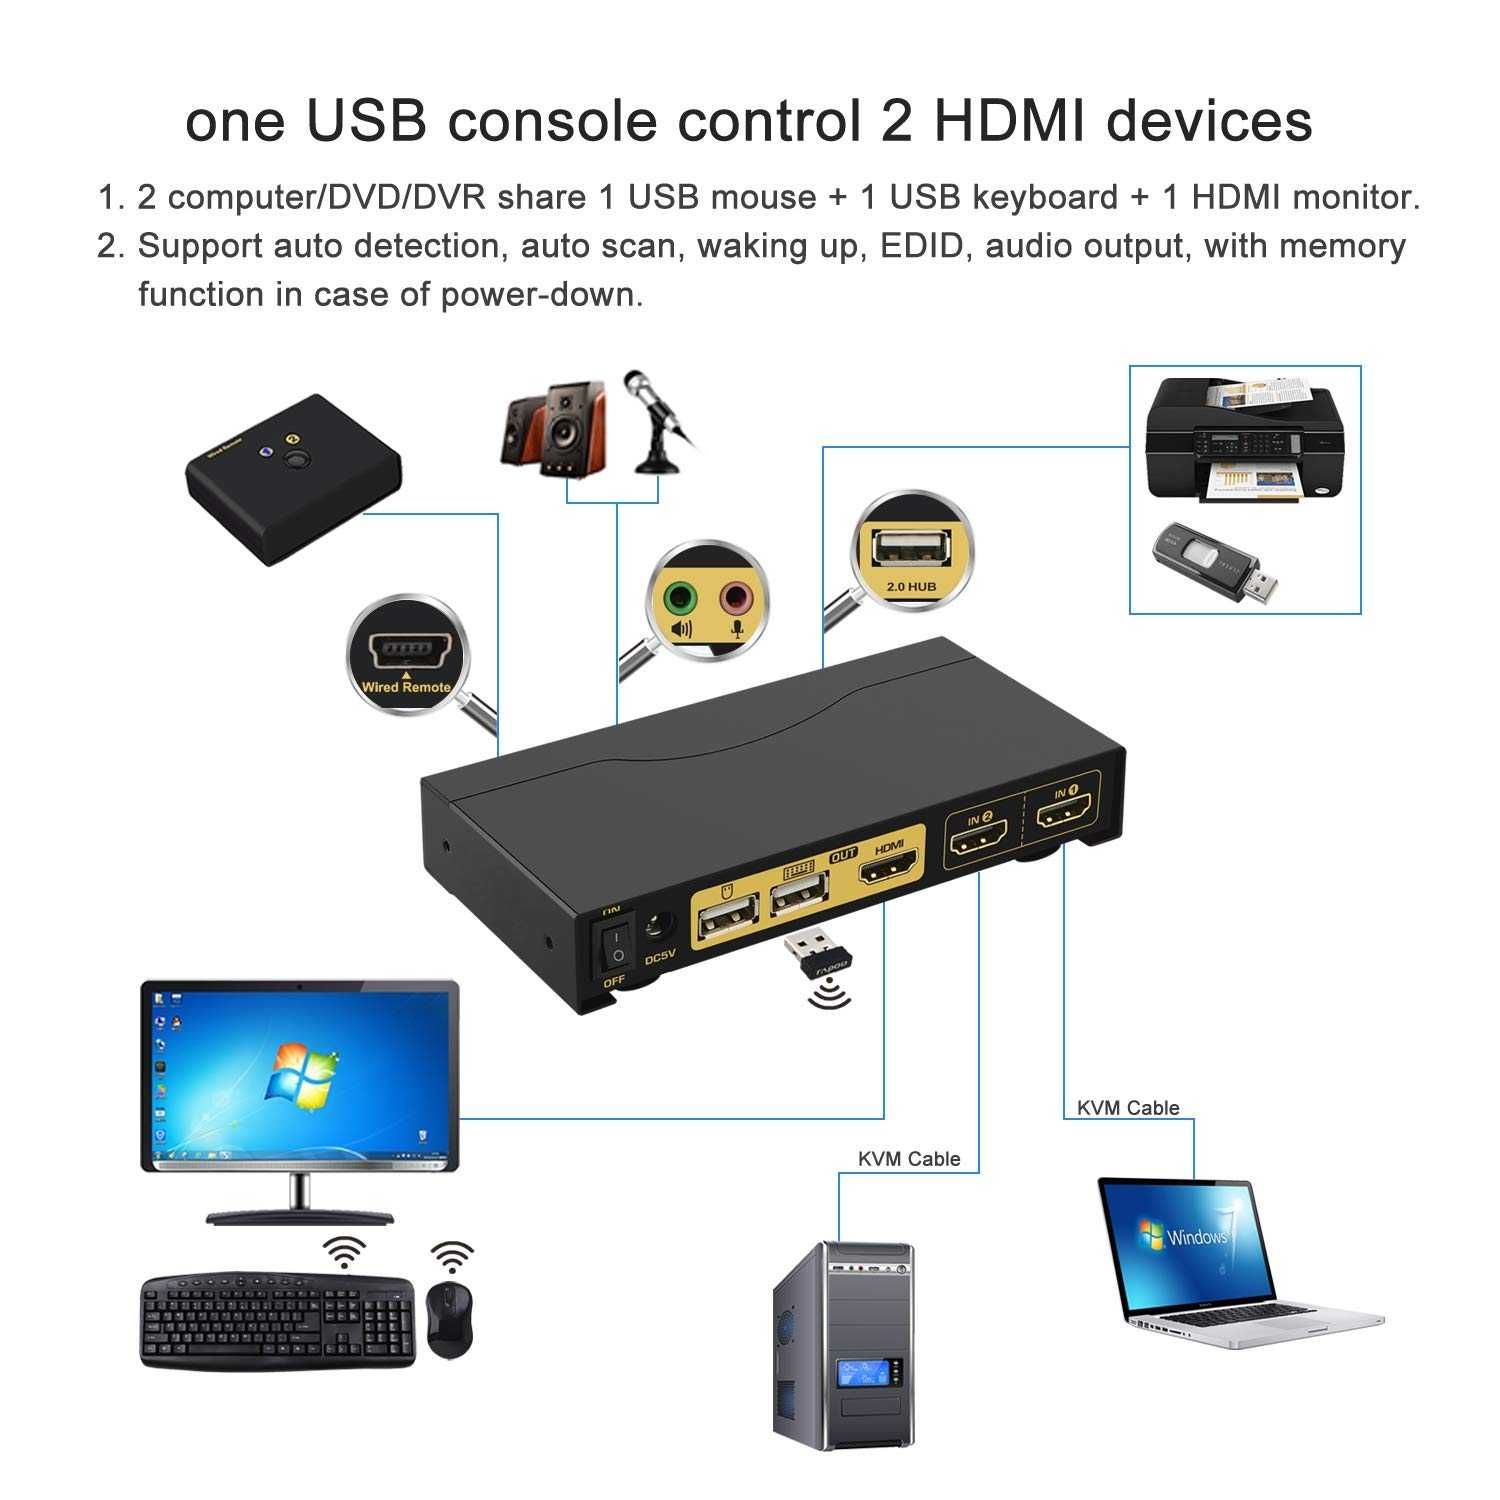 Switch KVM HDMI 4K 60Hz,USB 2 porturi,Hub USB 2.0,Suport audio